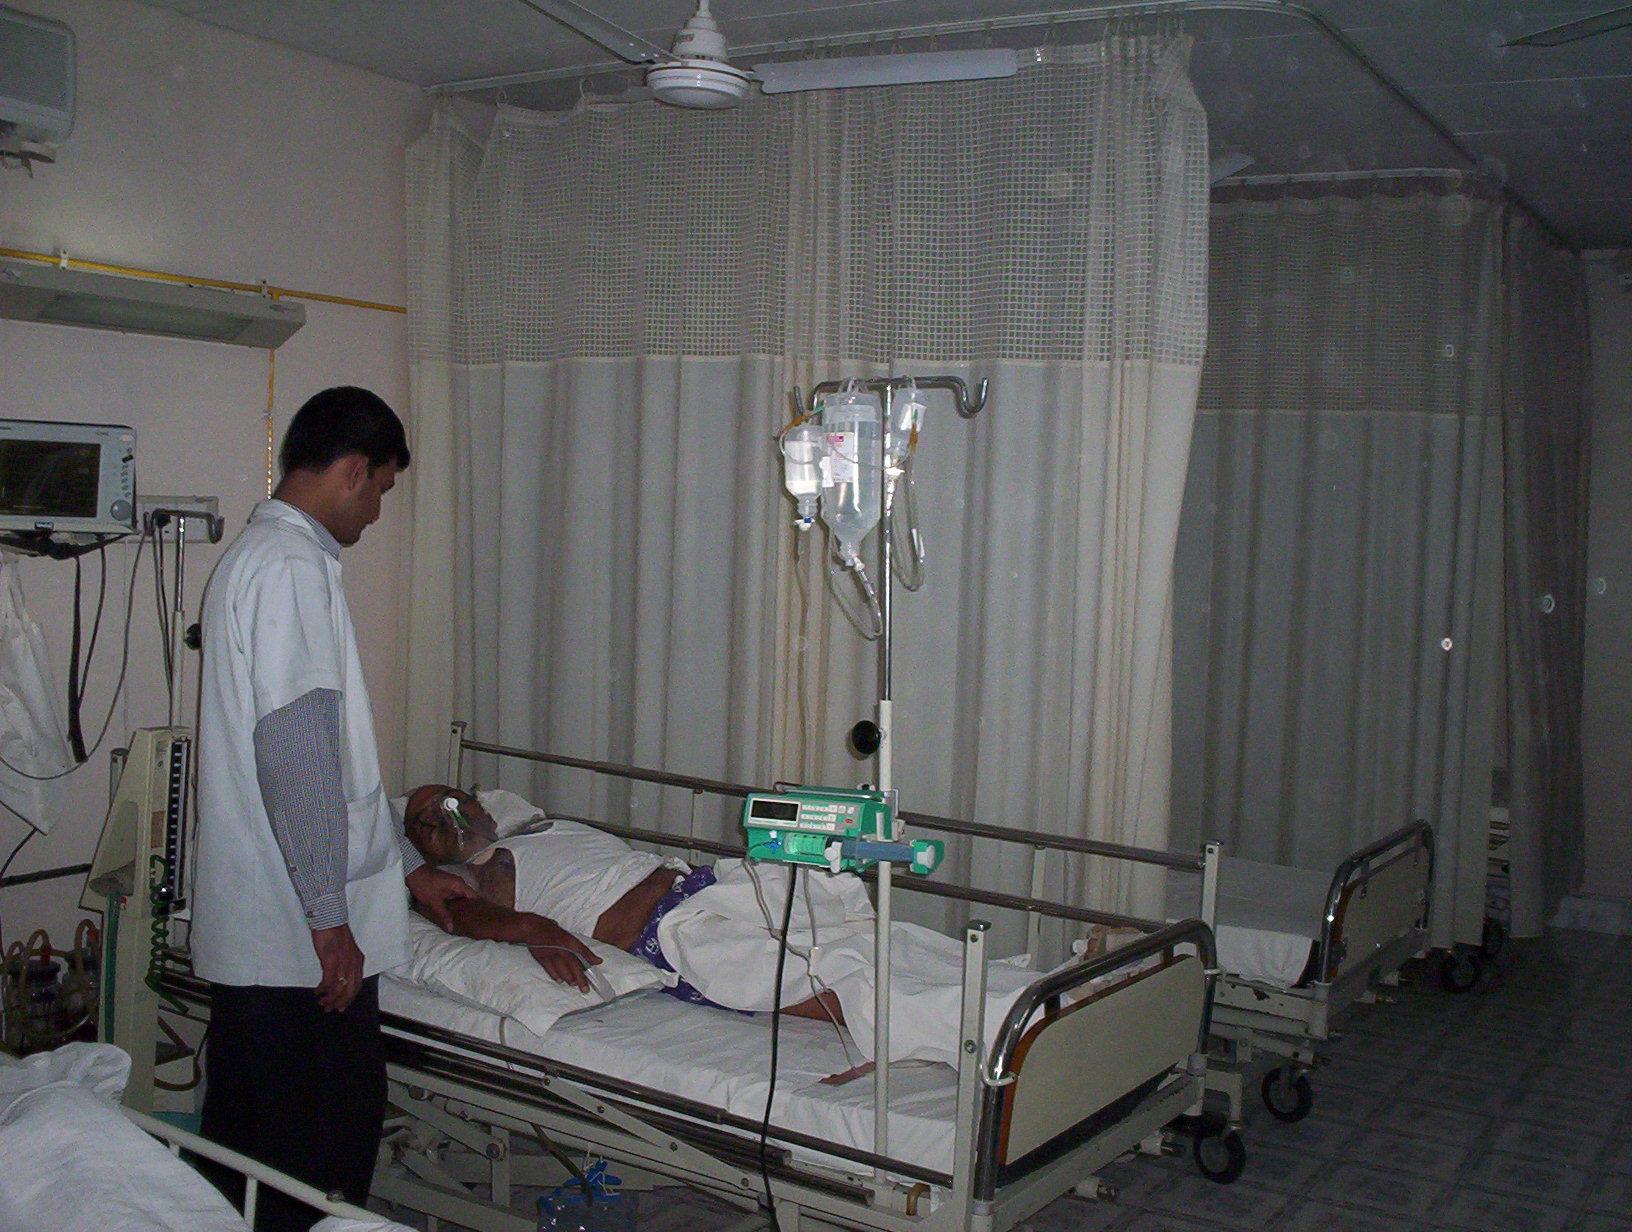 Manidhari Hospital And Maloo Neuro Centre